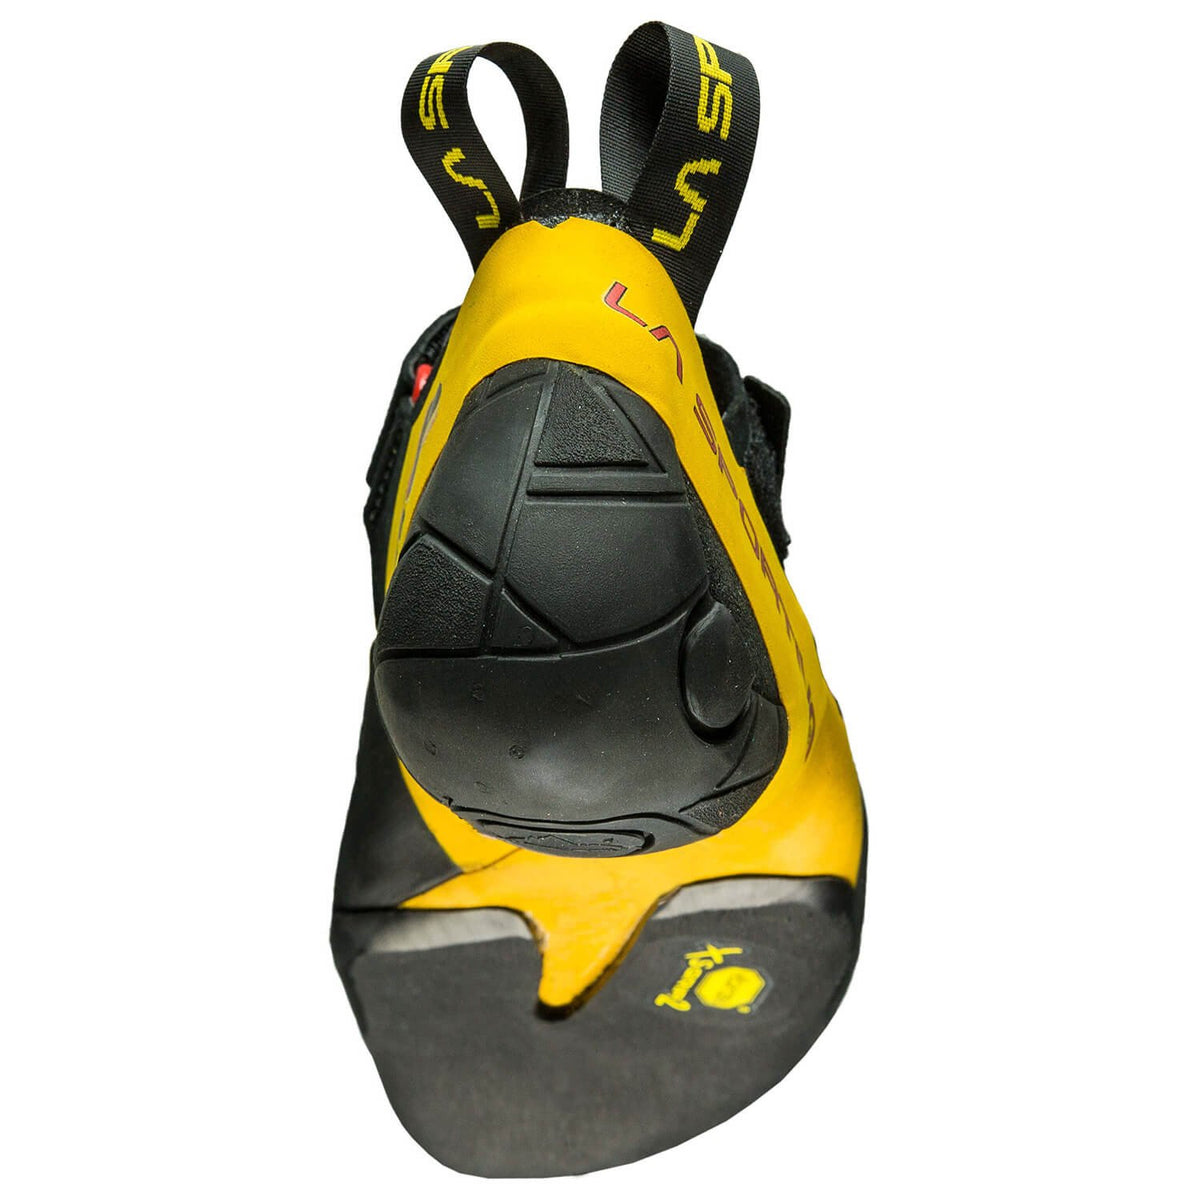 La Sportiva Skwama climbing shoe, rear view showing heel and sole design detail